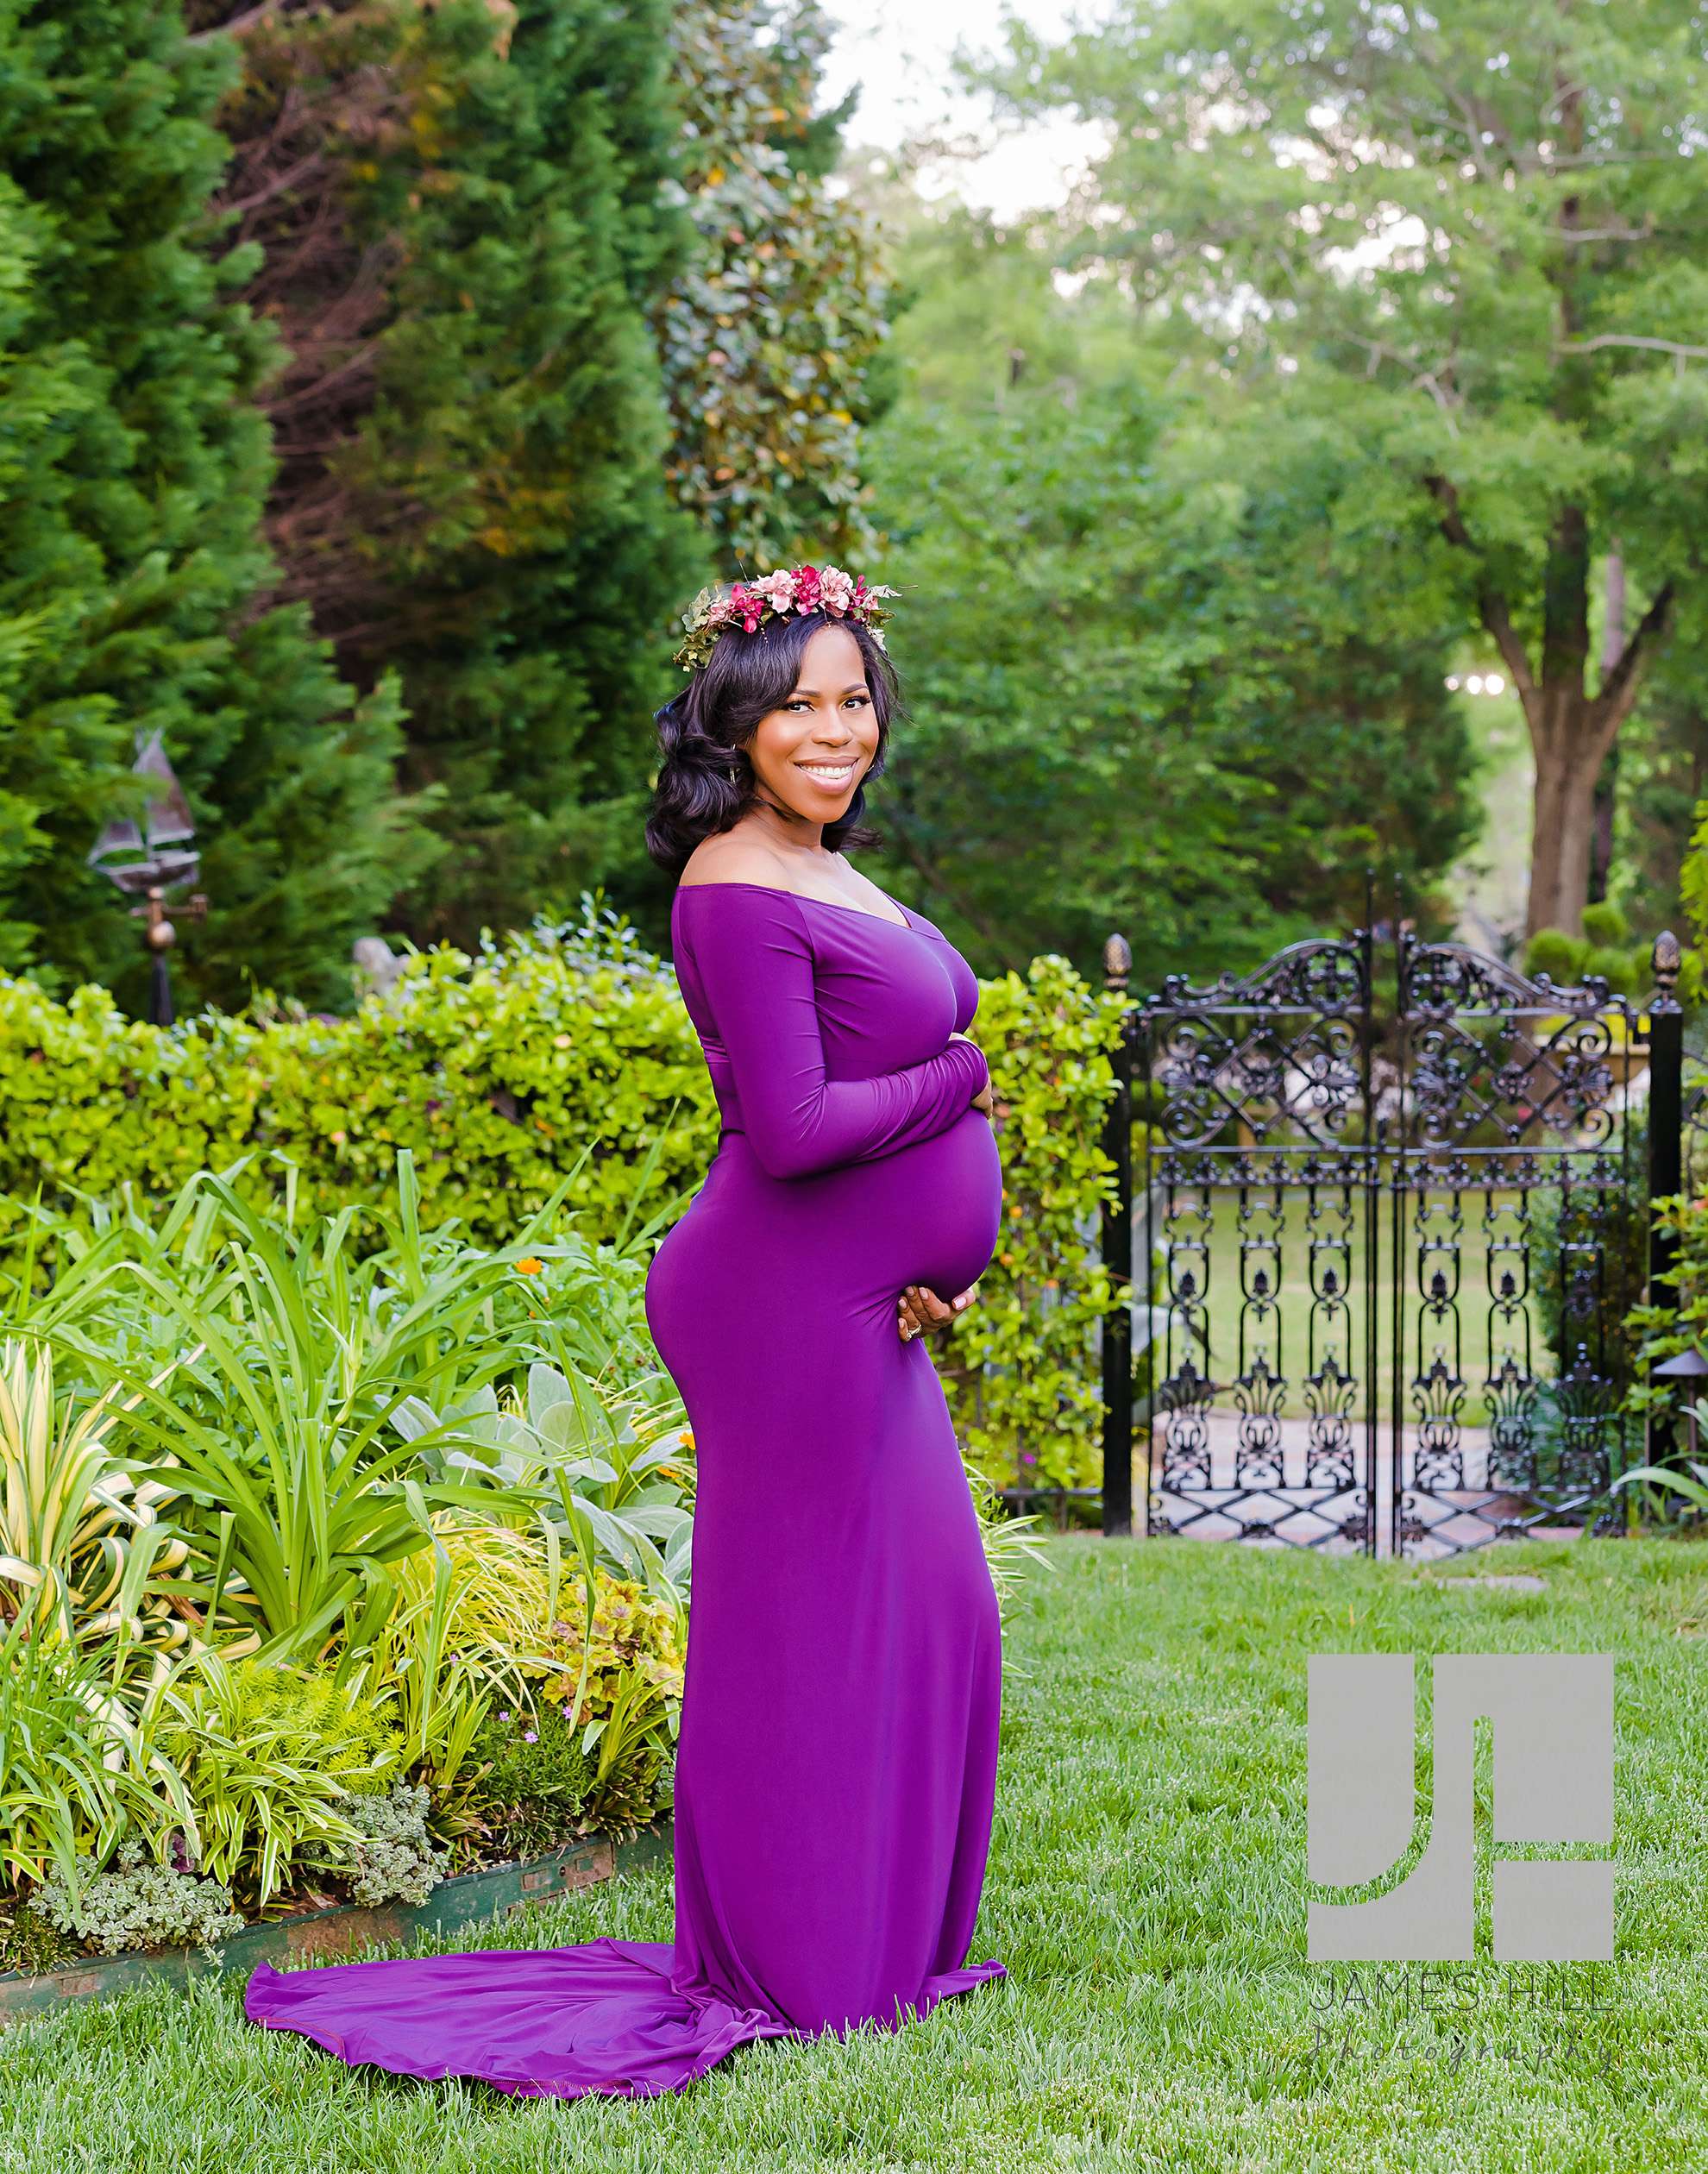 Kaivon looks amazing in this purple dress! 